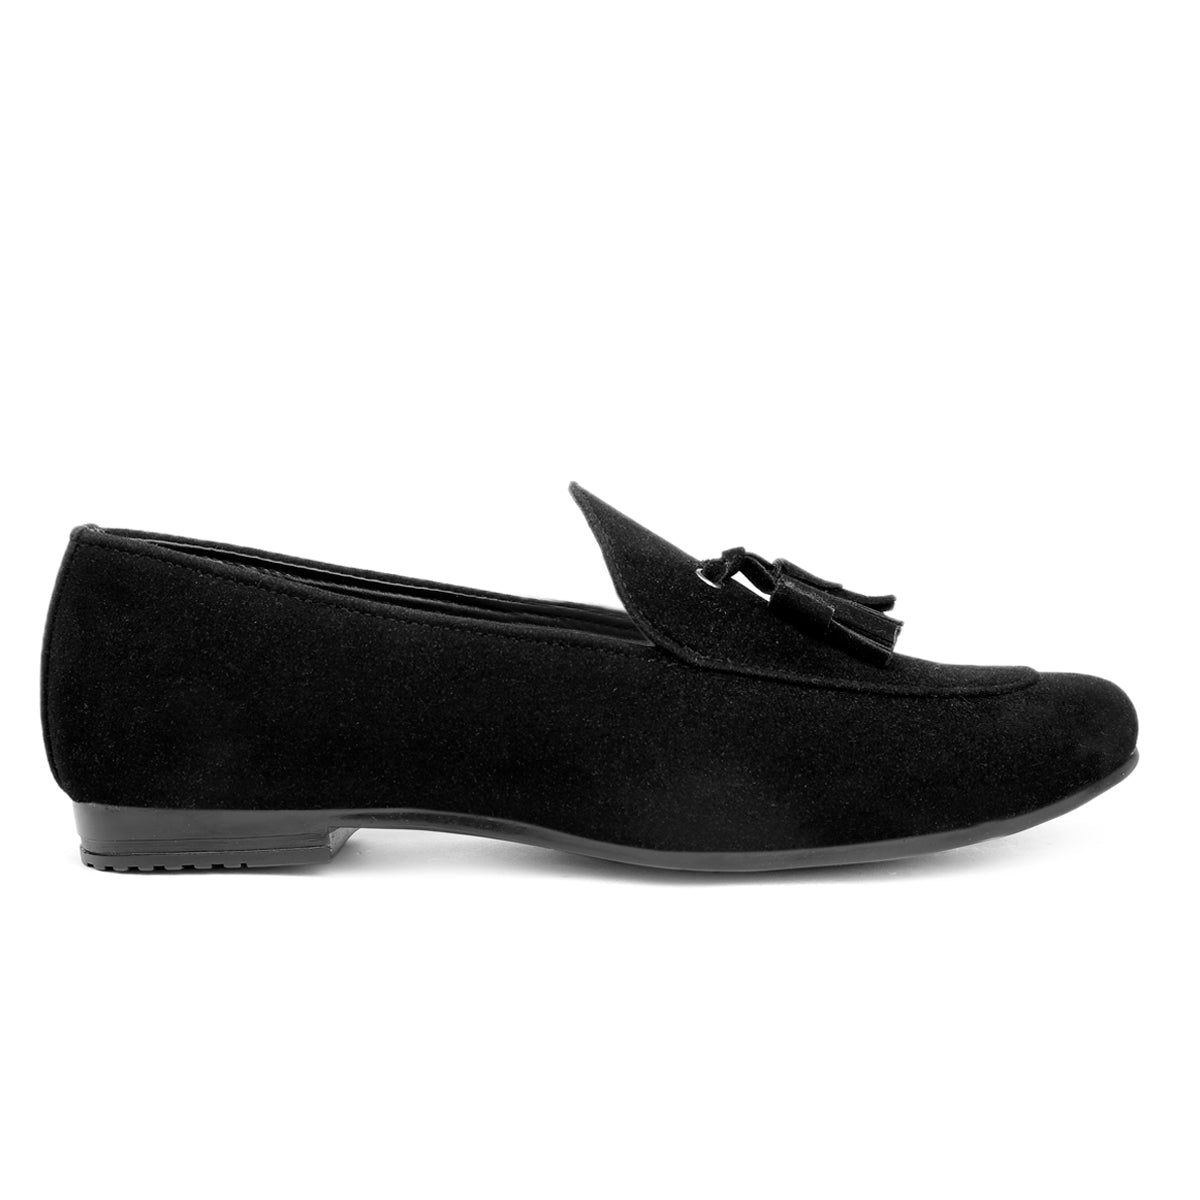 Designer Suede Moccasin Slip on Shoe For Men Party And Casual Wear -JackMarc - JACKMARC.COM